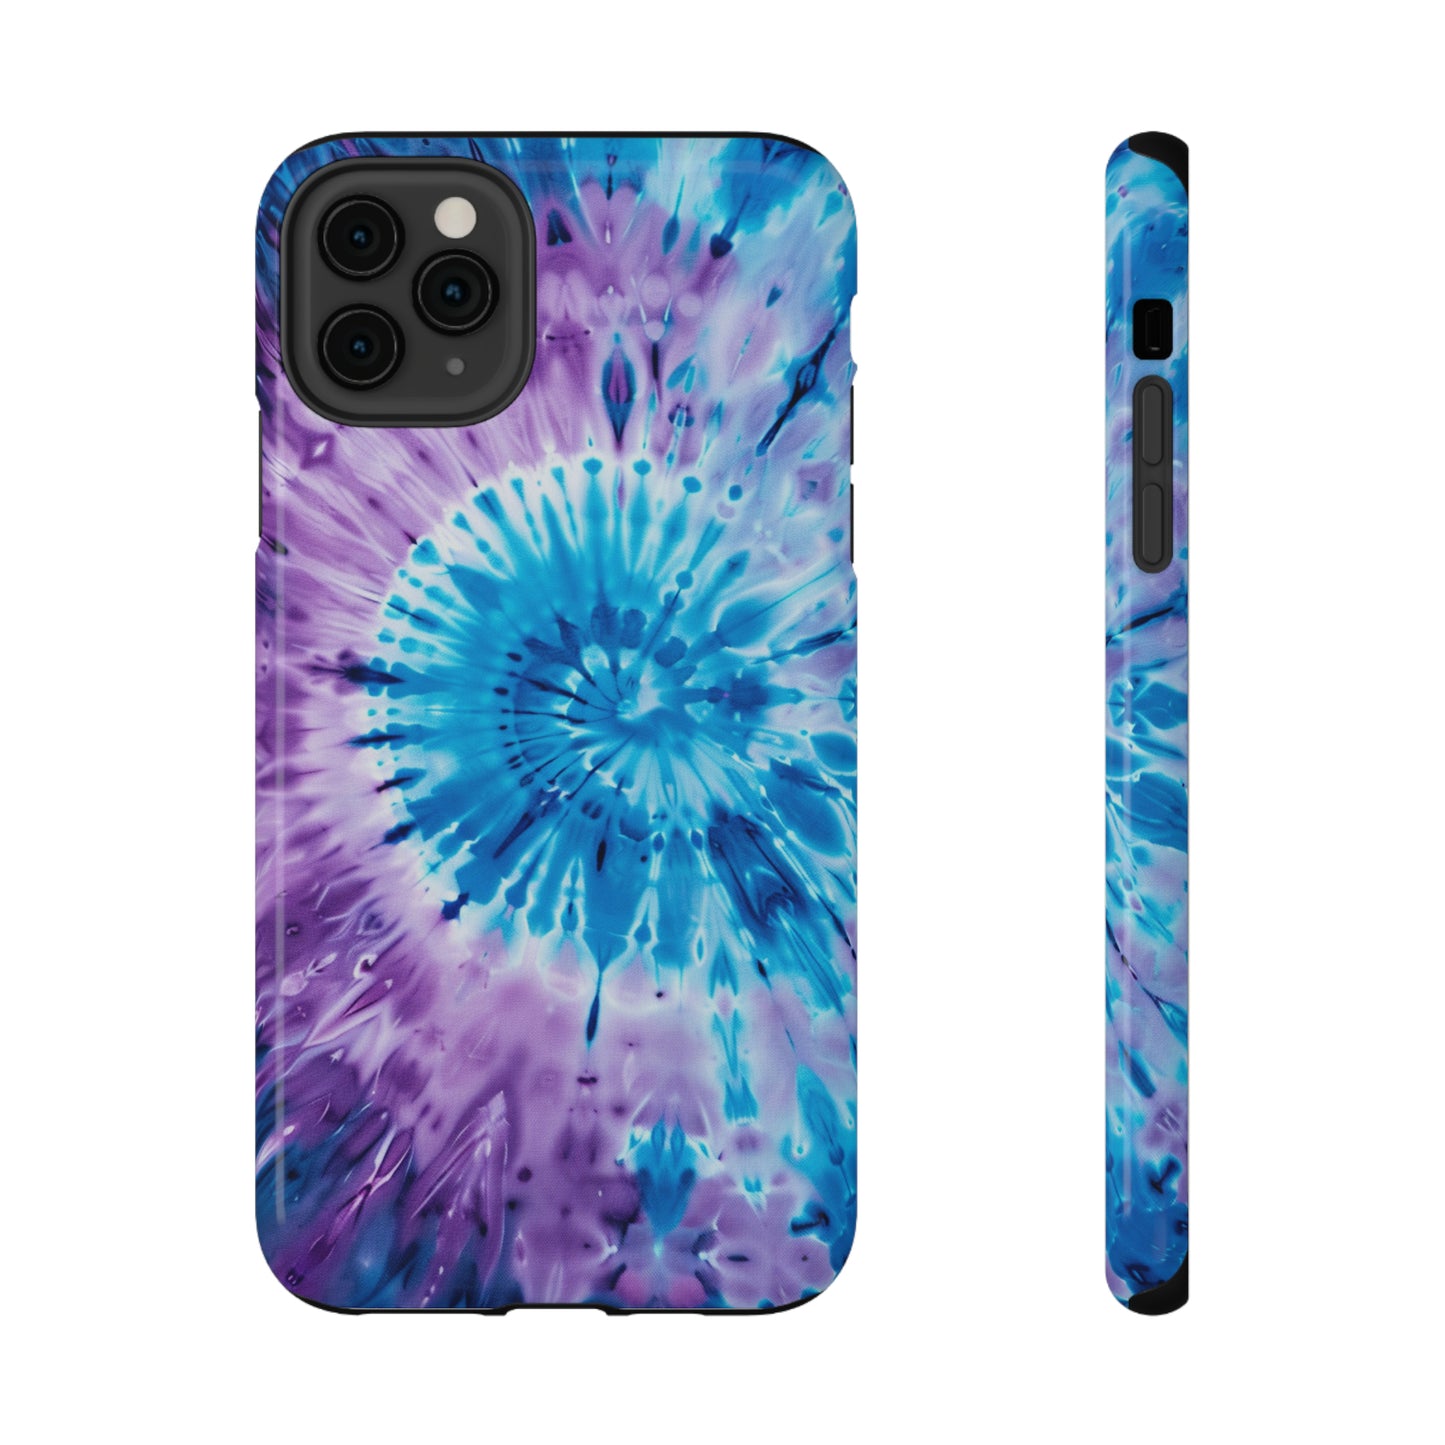 Blue-Purple Swirling Tie Dye Impact Resistant Phone Case